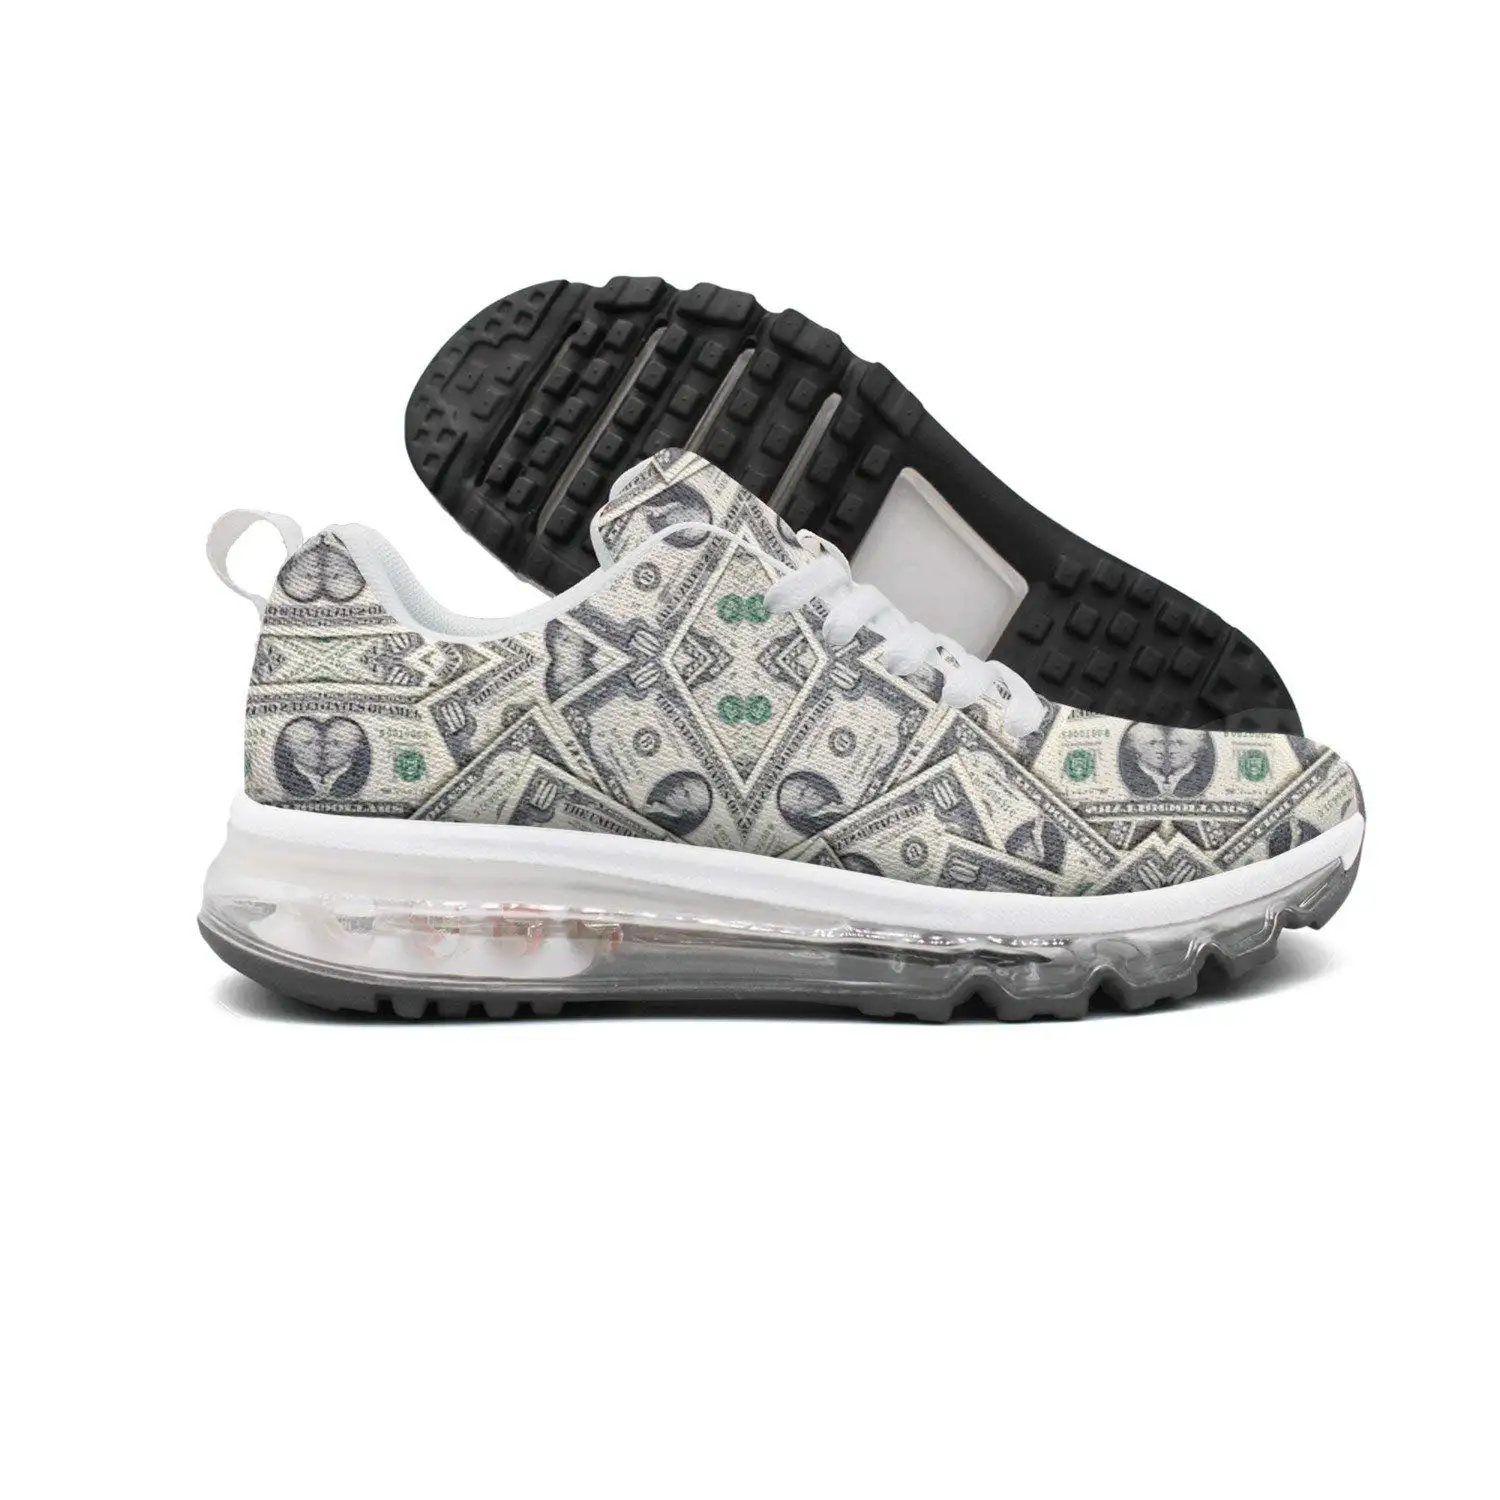 running shoes under 5 dollars